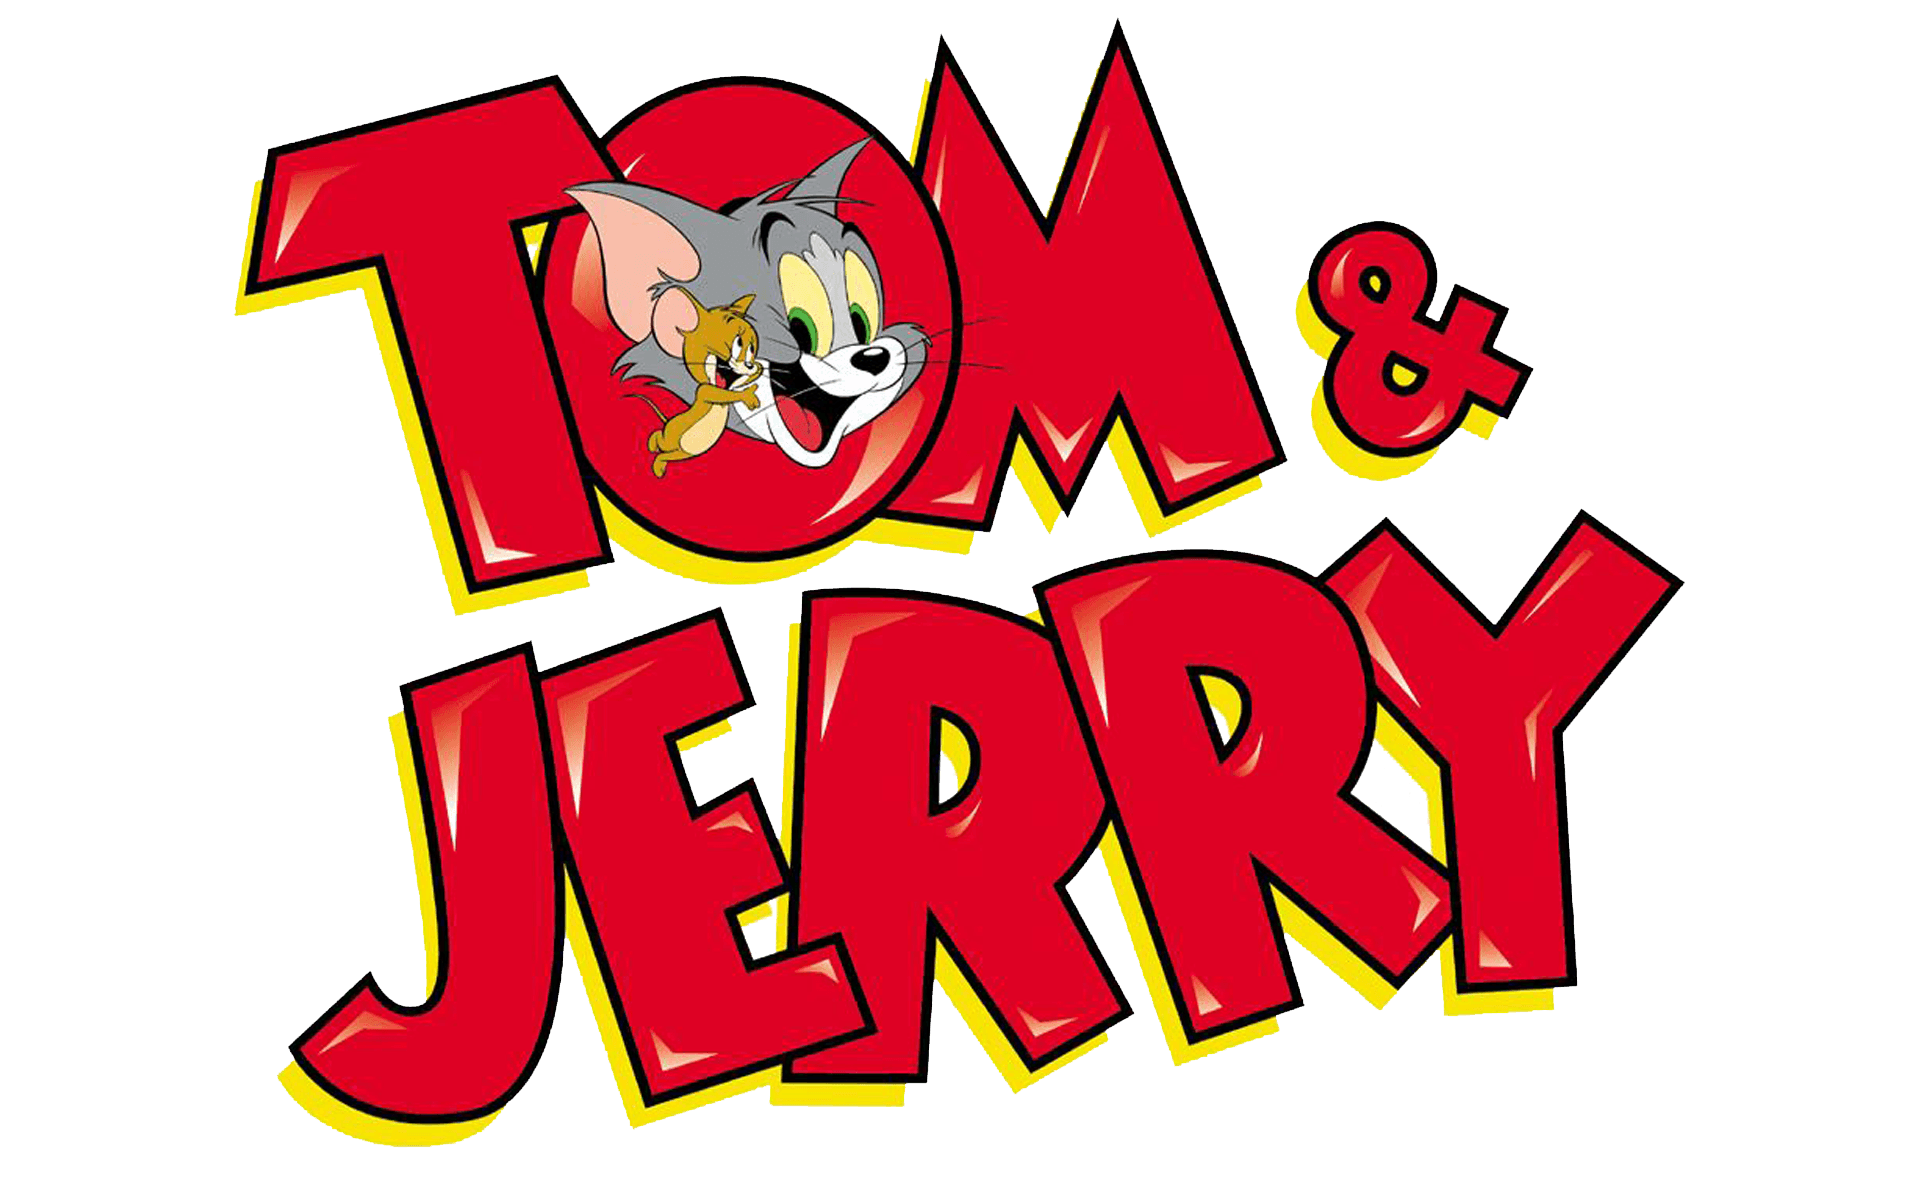 Tom and Jerry Logo - Tom And Jerry Cartoon Logo PNG Image. Free transparent